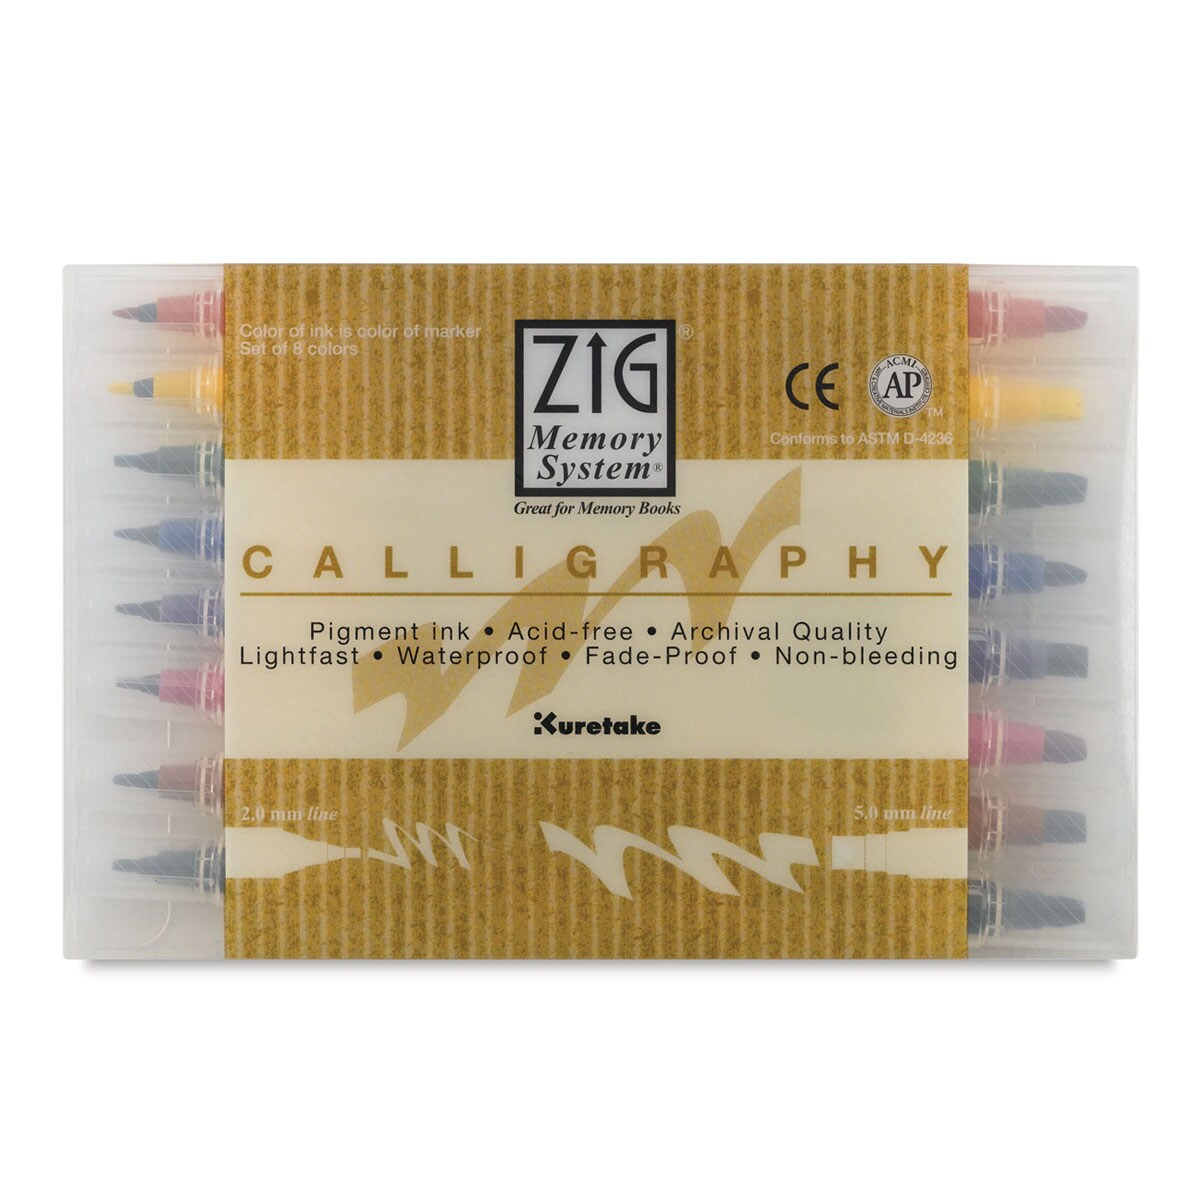 Kuretake Zig Memory System Twin Tip Calligraphy Markers - Set of 8, 2.0 mm/5.0 mm Tips